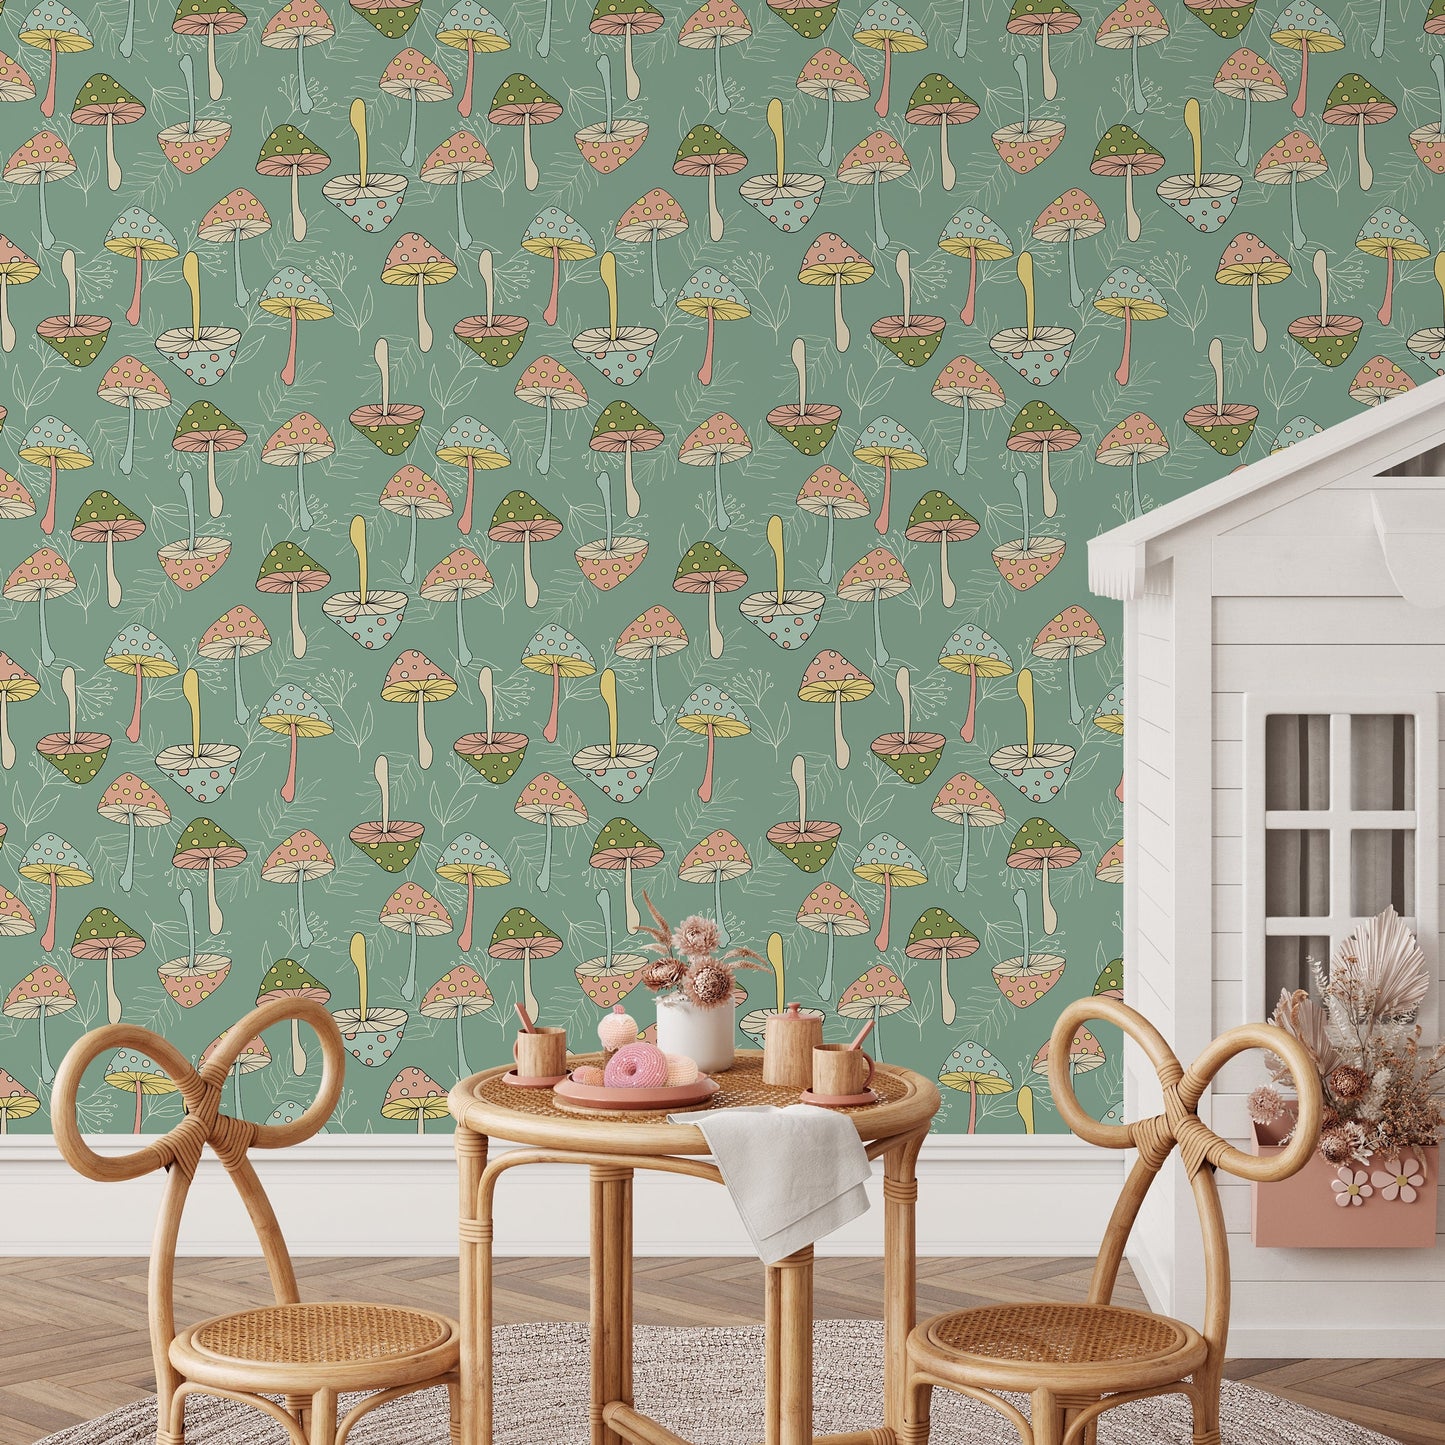 Retro Mushroom Wallpaper Groovy Wallpaper Peel and Stick and Traditional Wallpaper - D891